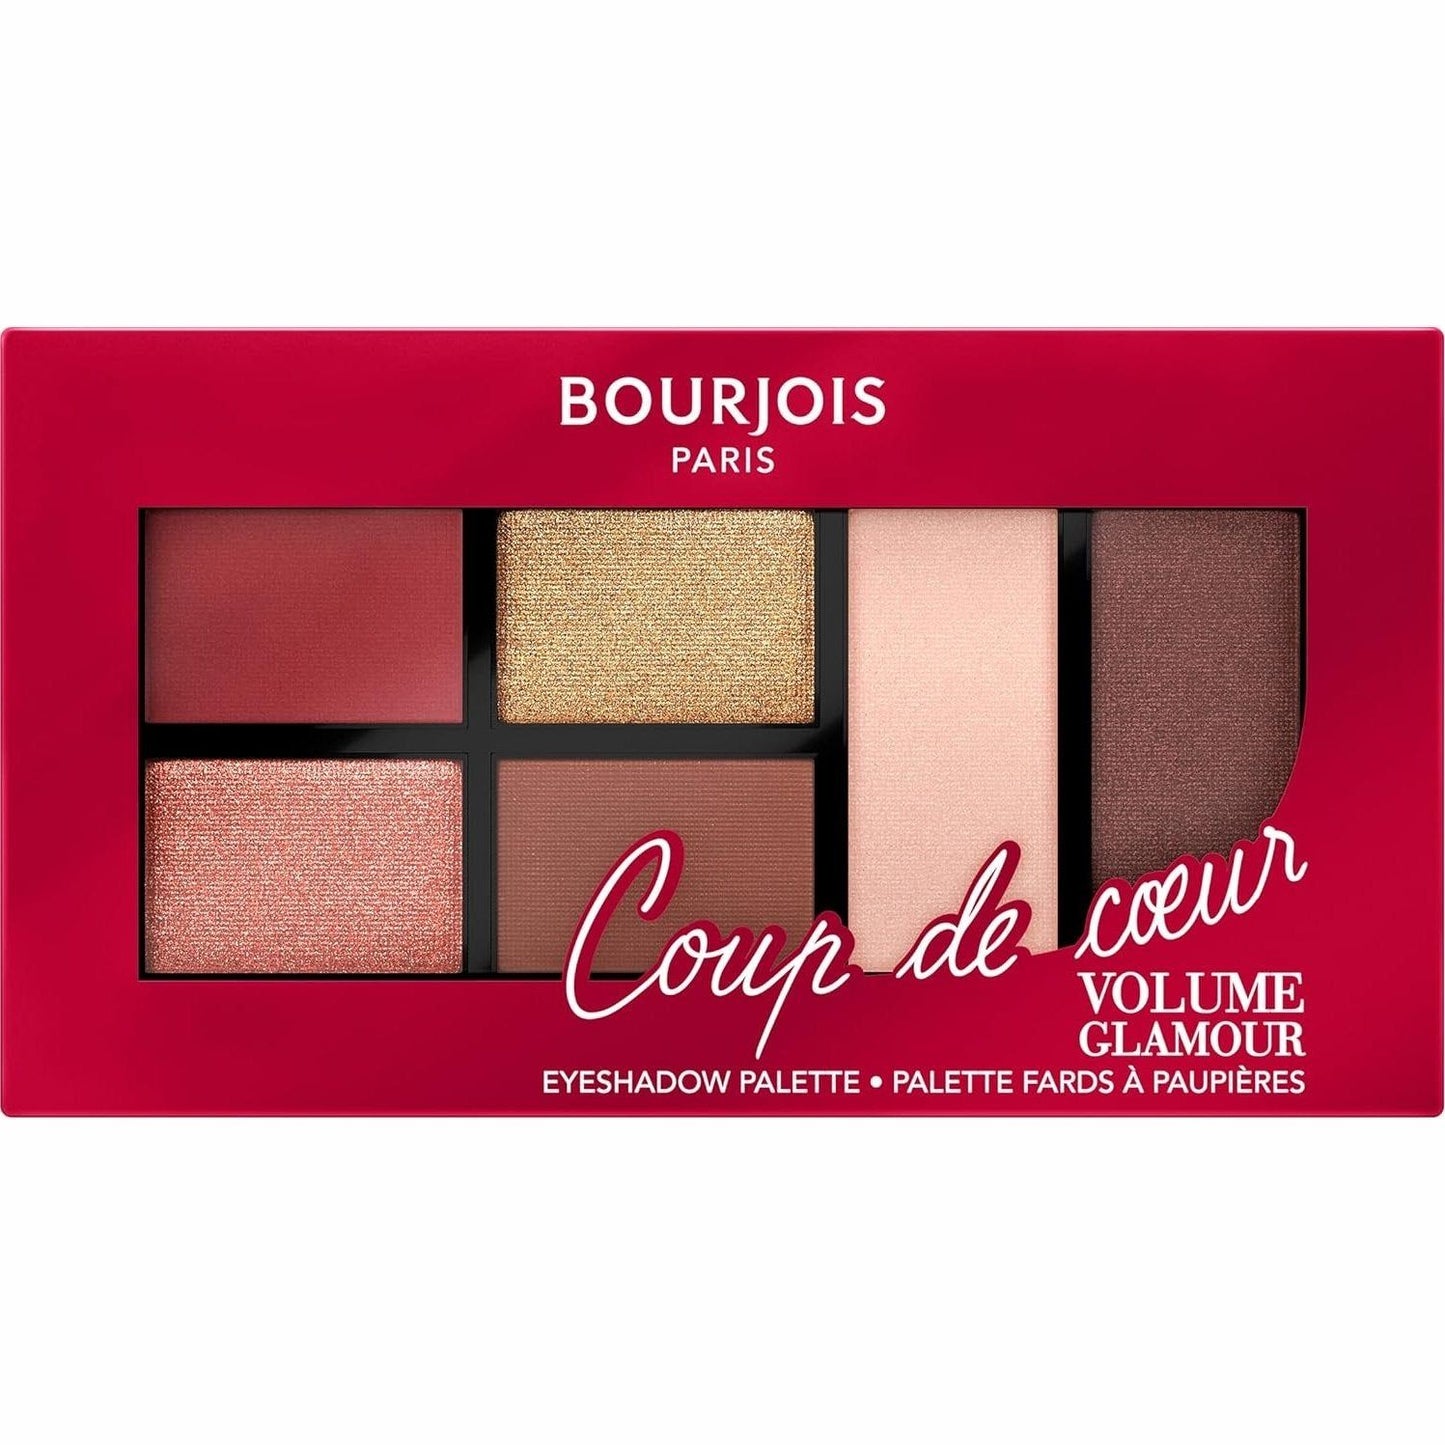 Bourjois Volume Glamour Coup De Coeur Eyeshadow Palette 01 Intense Look | Merthyr Tydfil | Why Not Shop Online